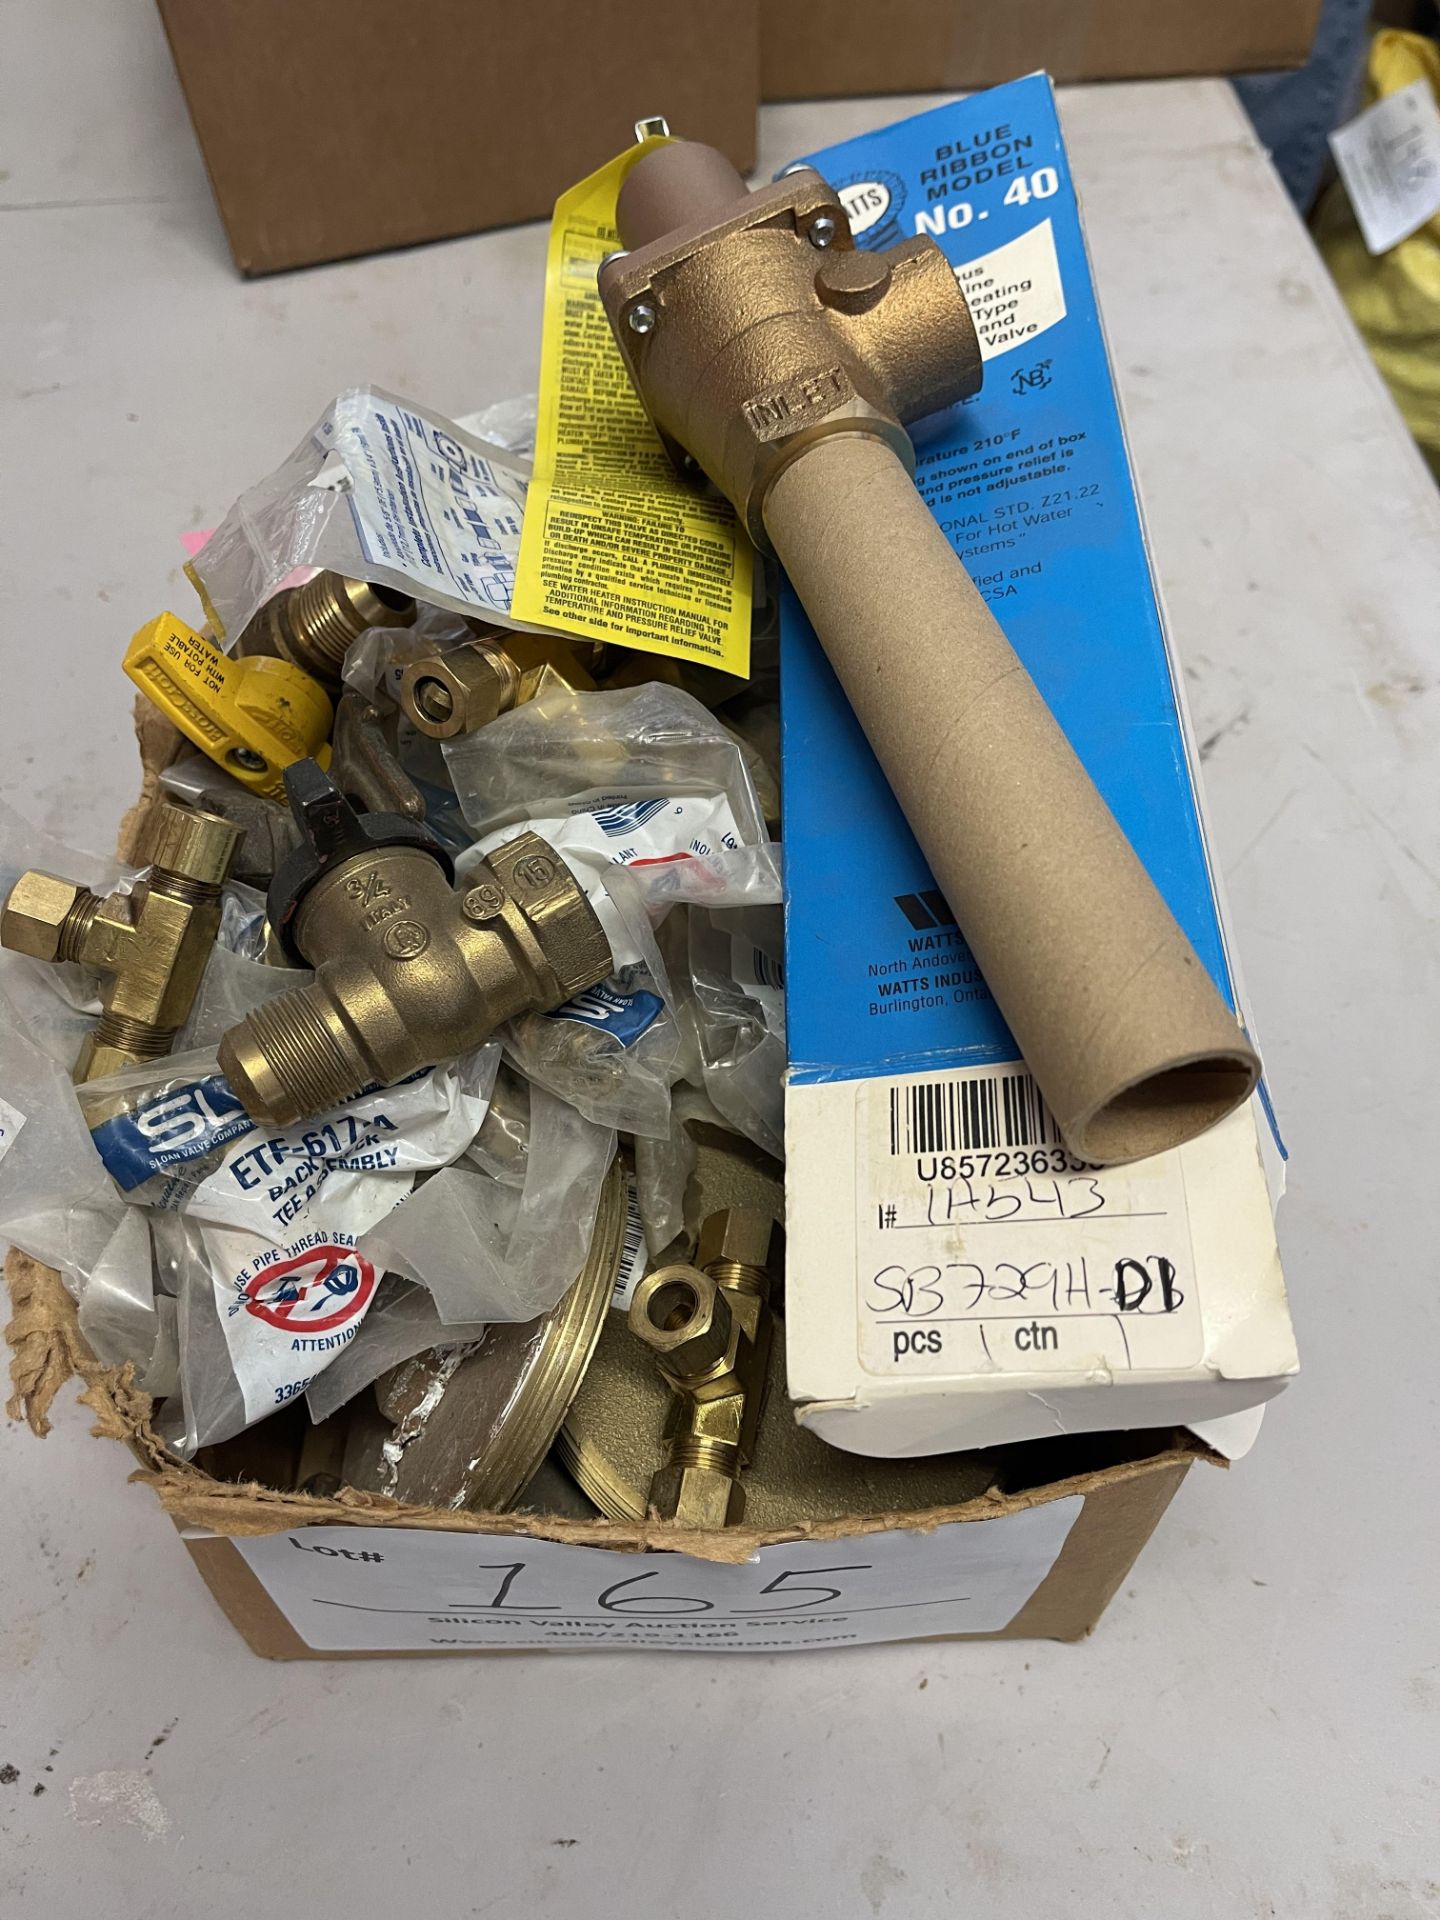 Miscellaneous brass valves